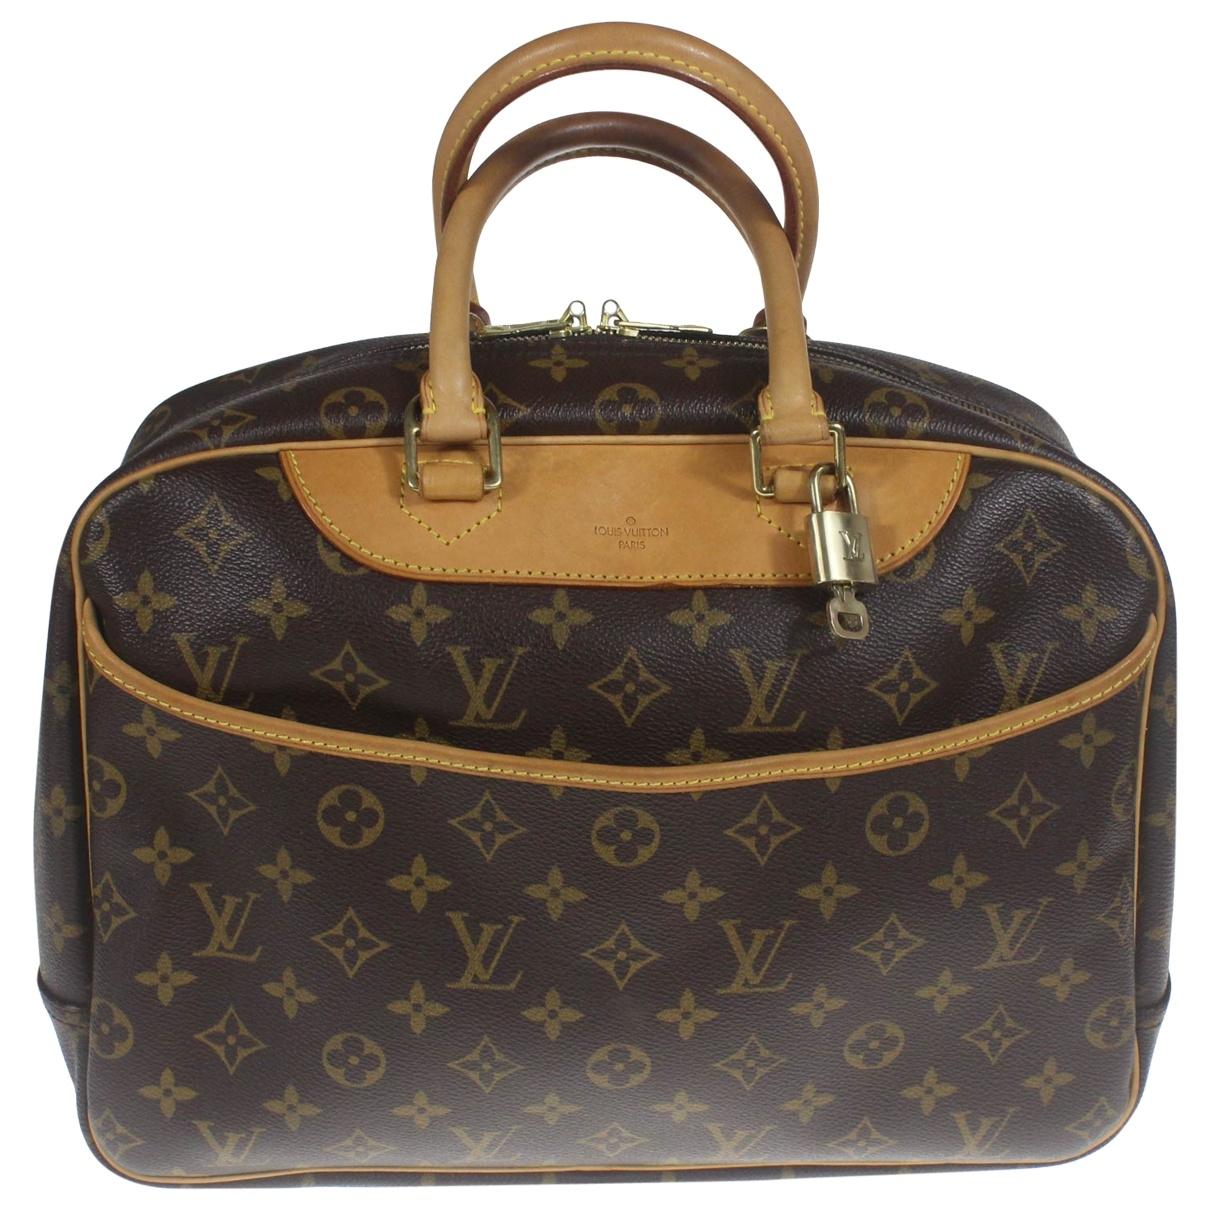 Lyst - Louis Vuitton Vintage Deauville Brown Cloth Handbag in Brown